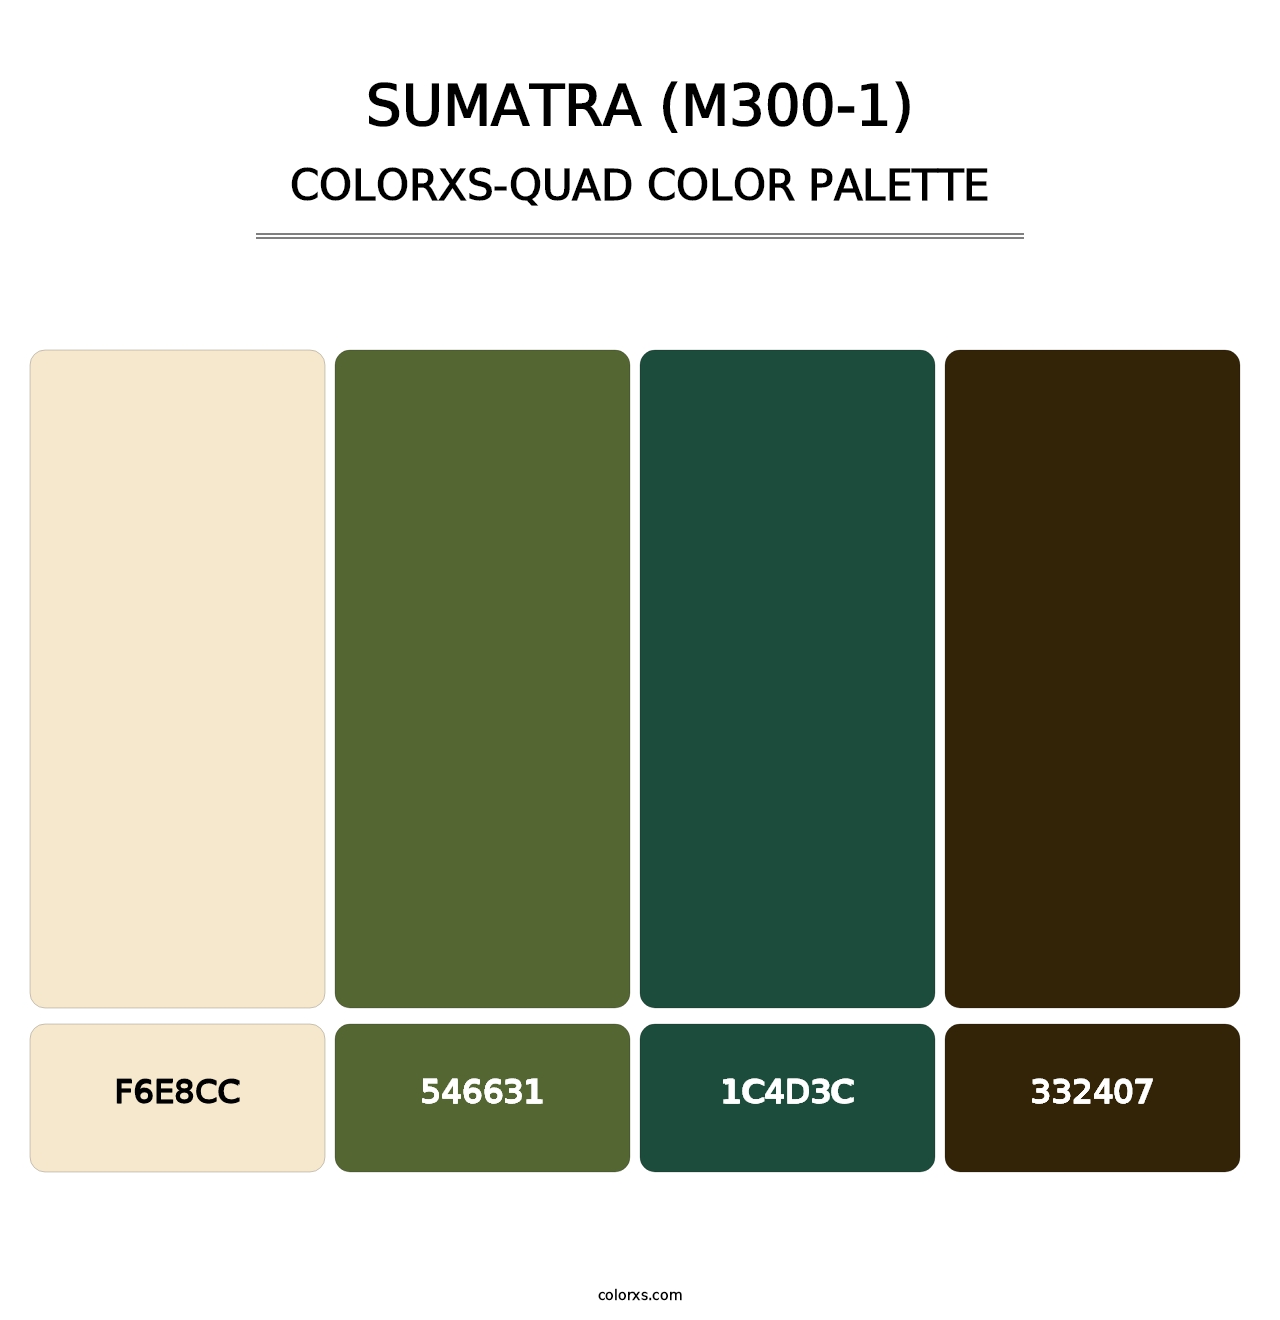 Sumatra (M300-1) - Colorxs Quad Palette